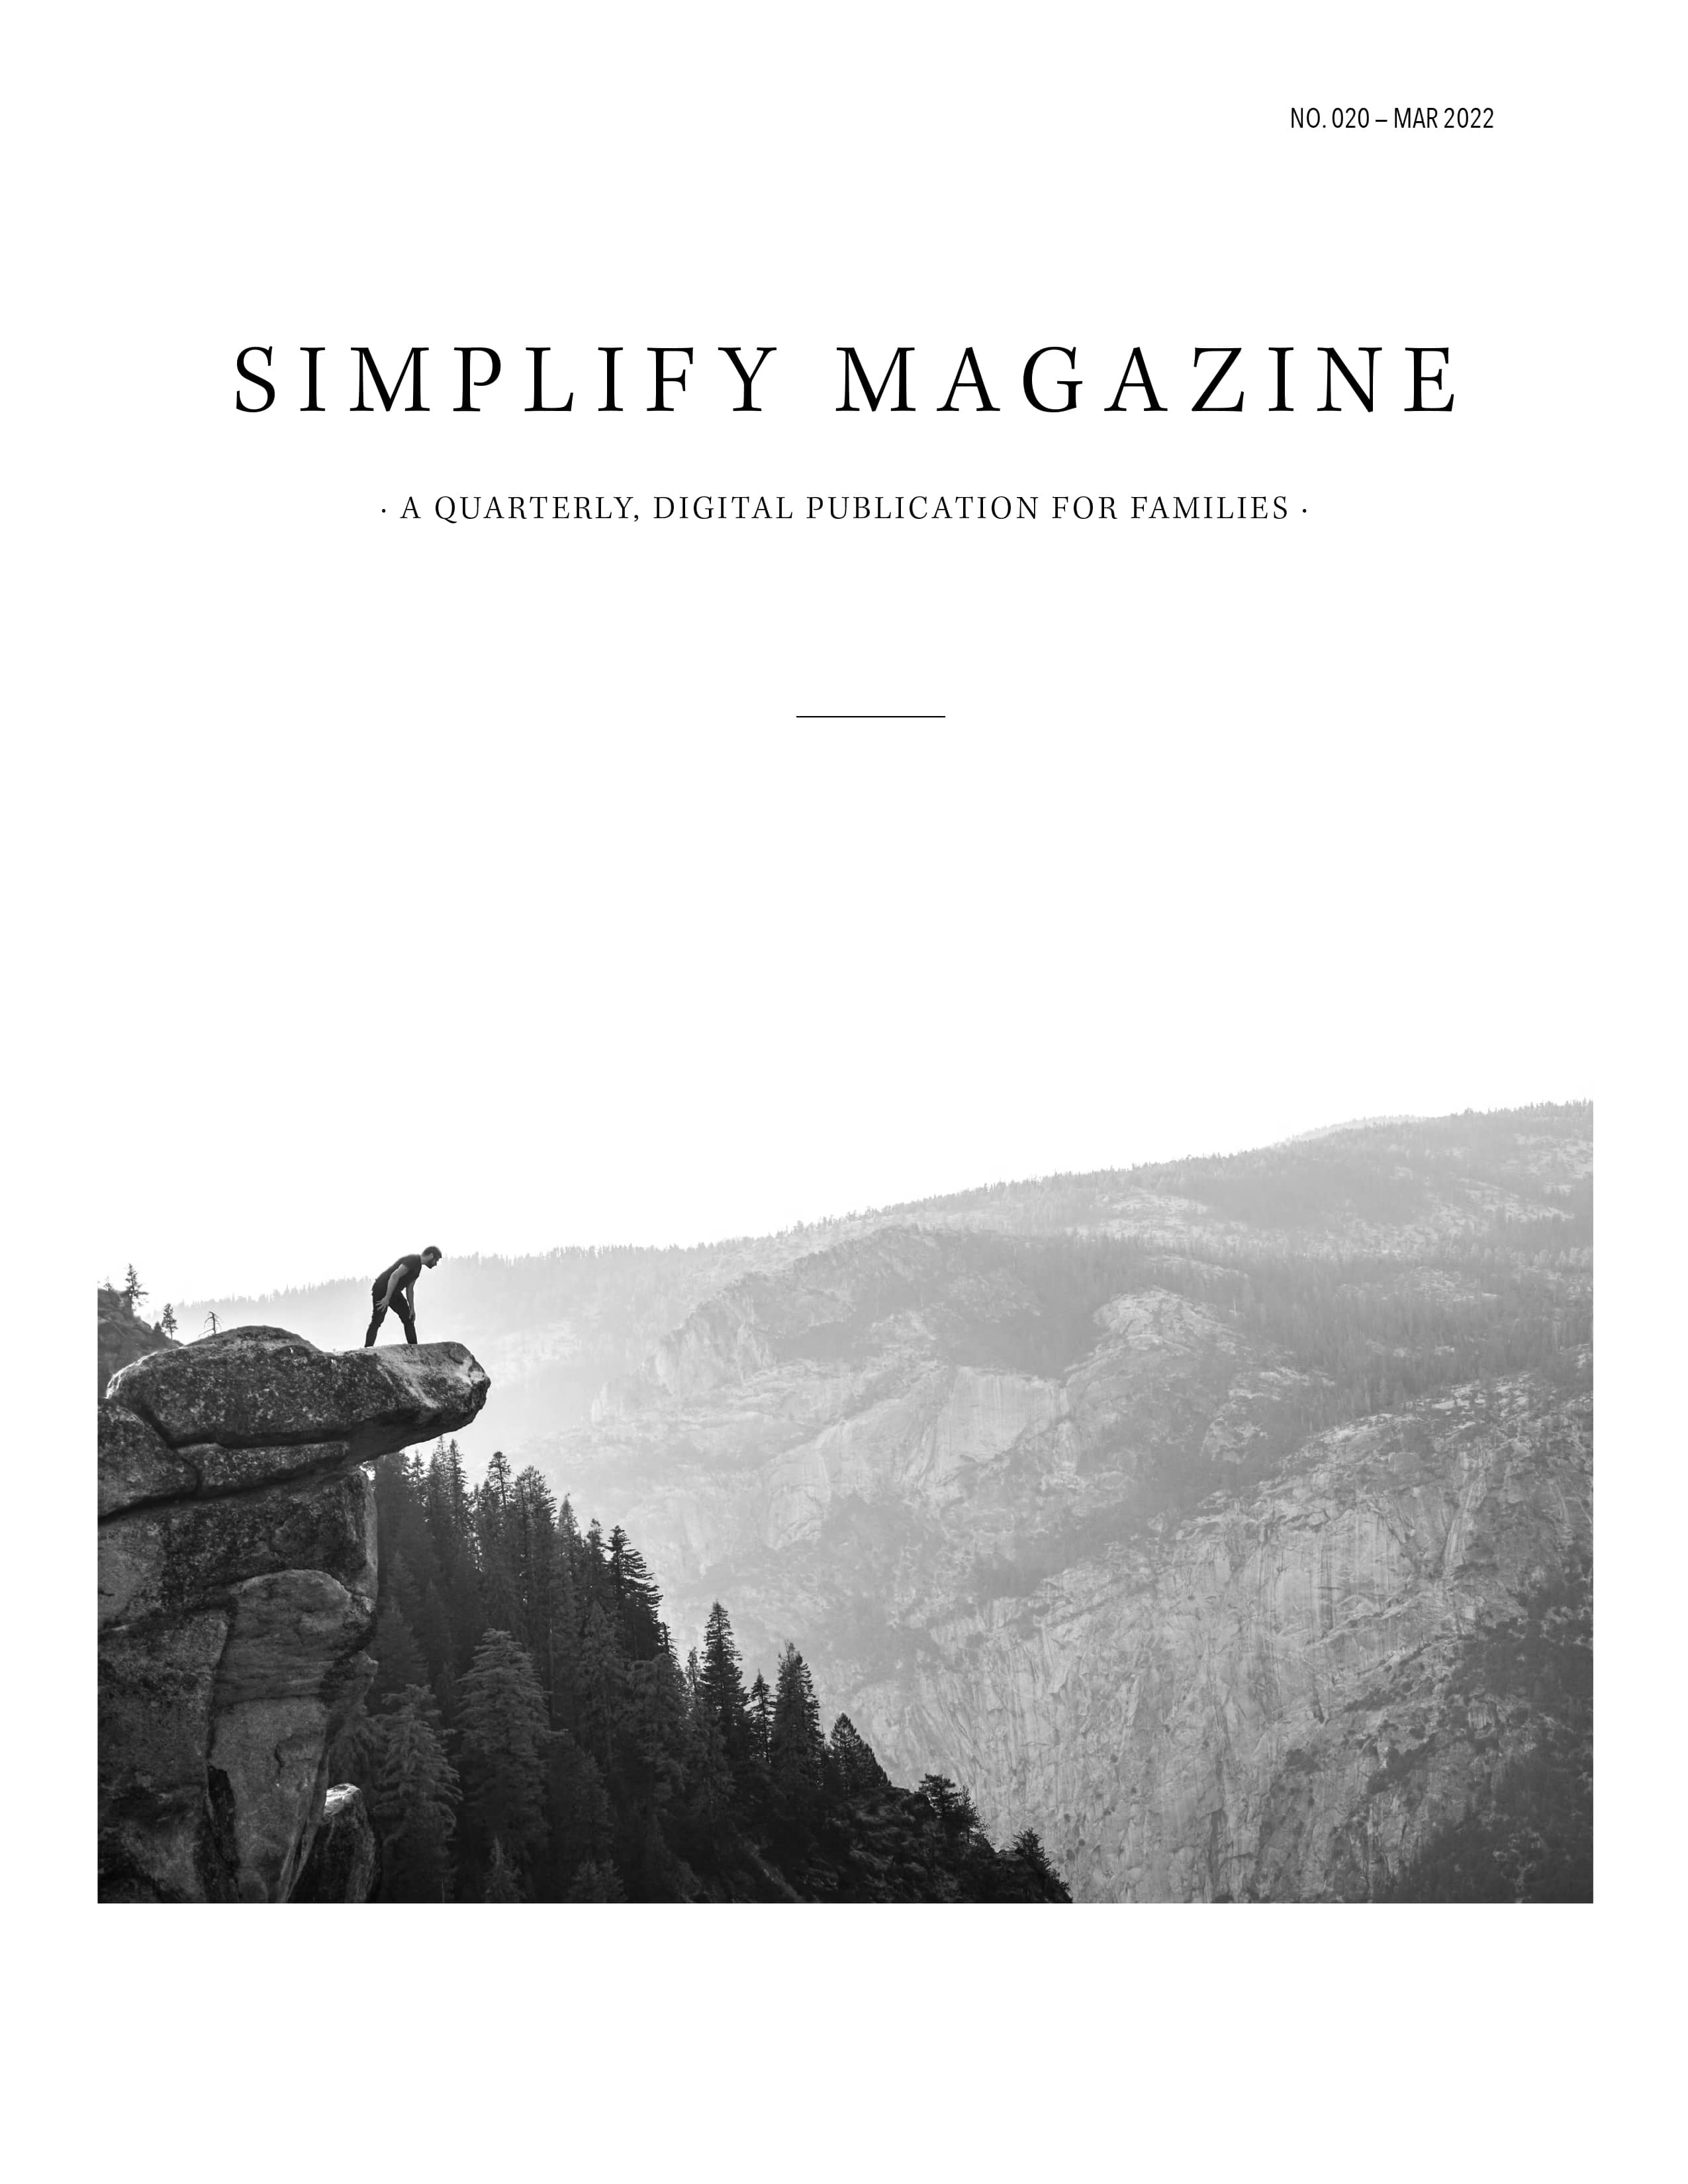 Simplify Magazine Issue #020